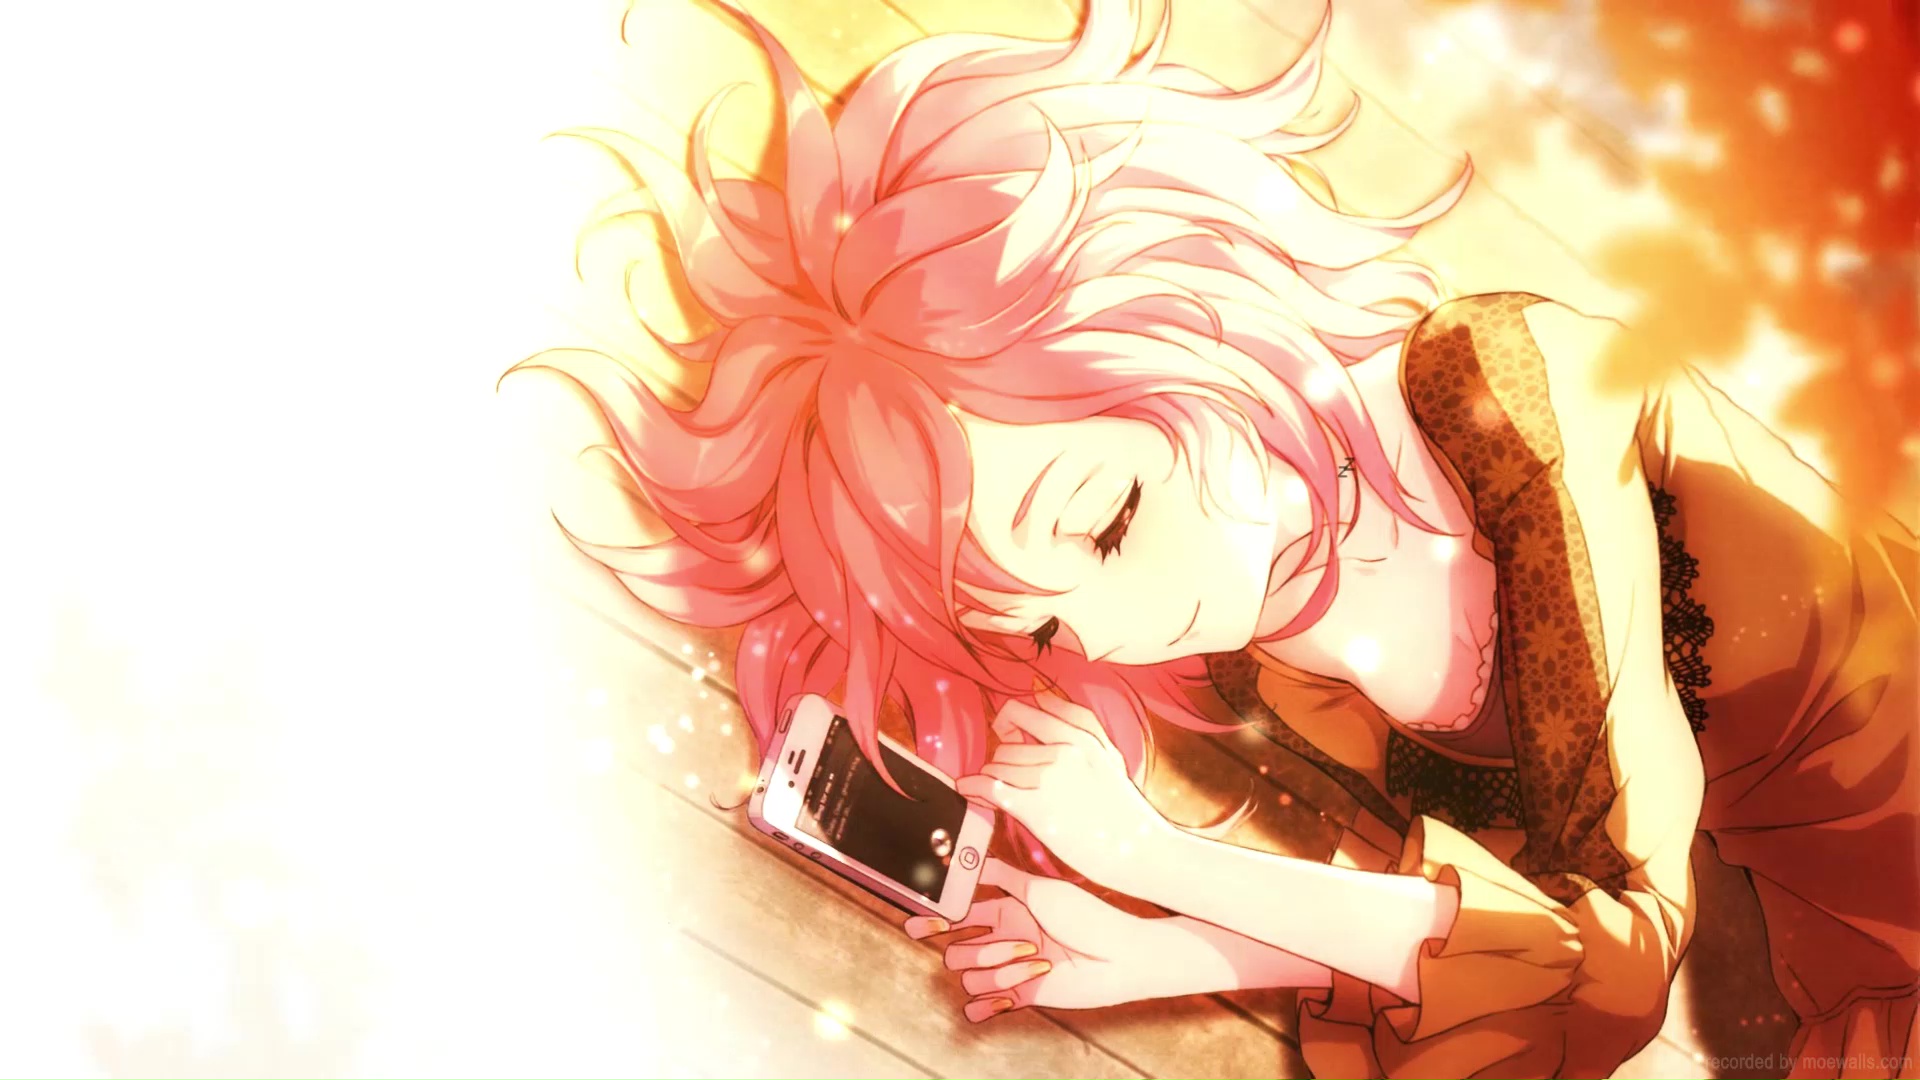 Share more than 80 sleeping anime wallpaper best - in.duhocakina